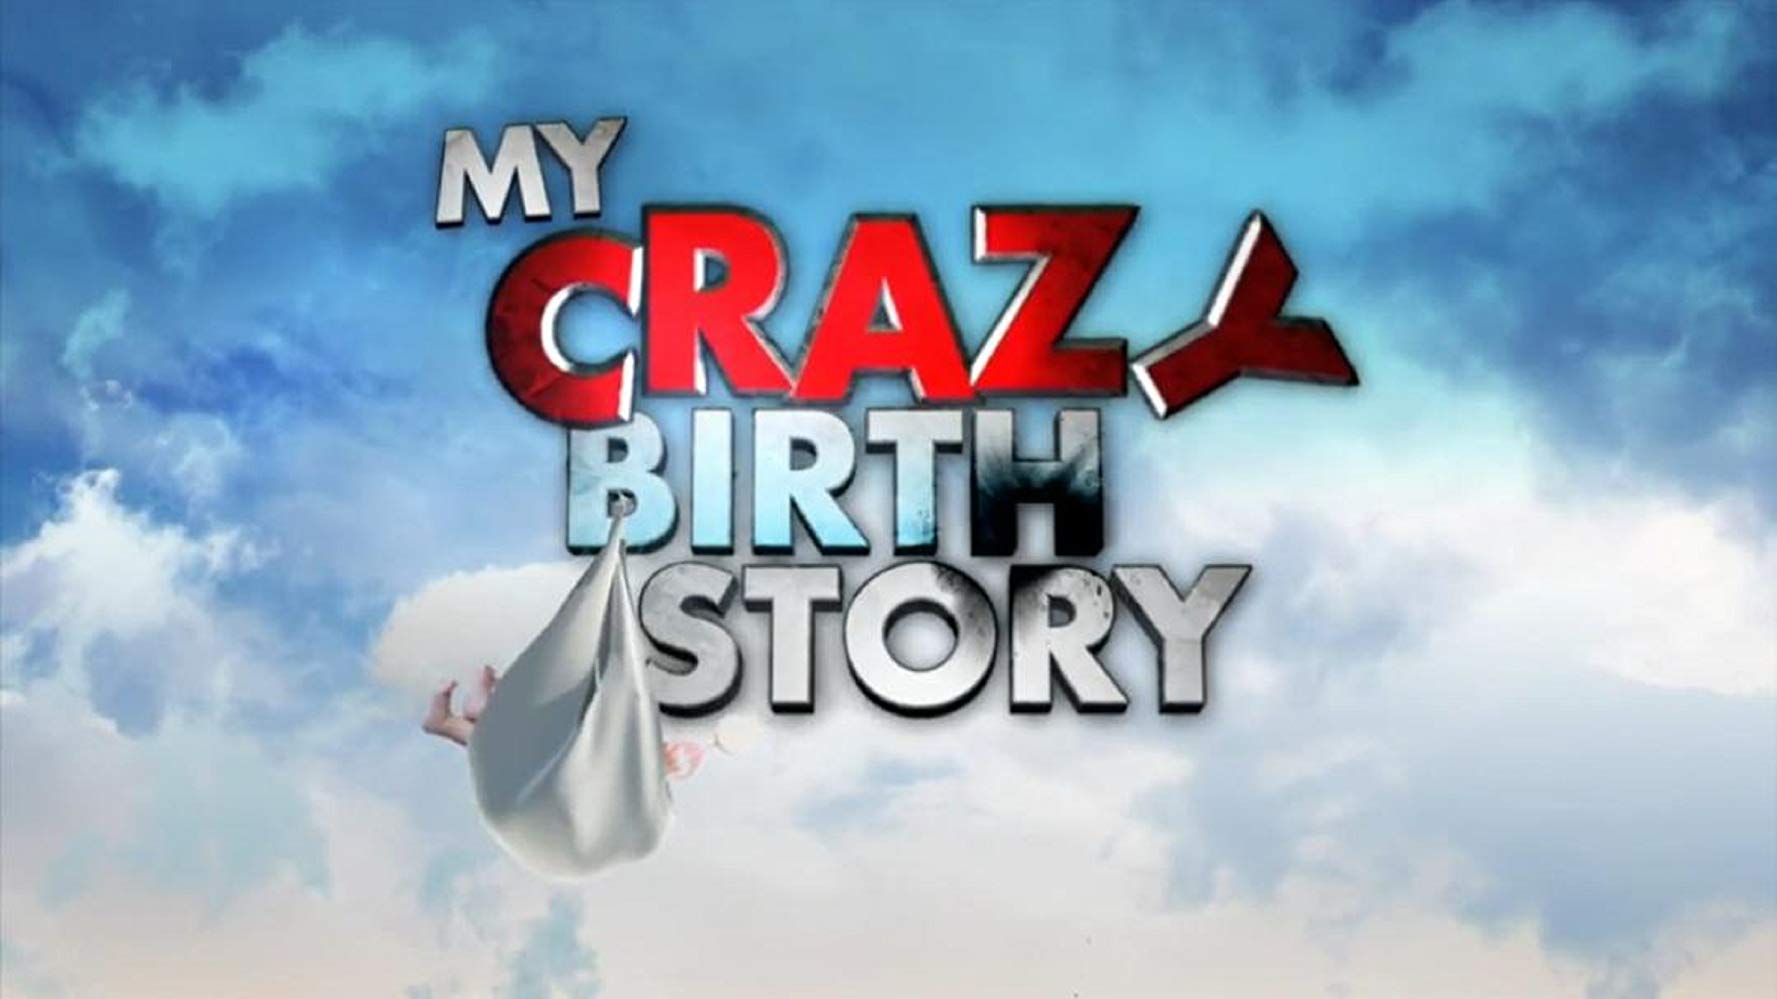 My crazy birth story